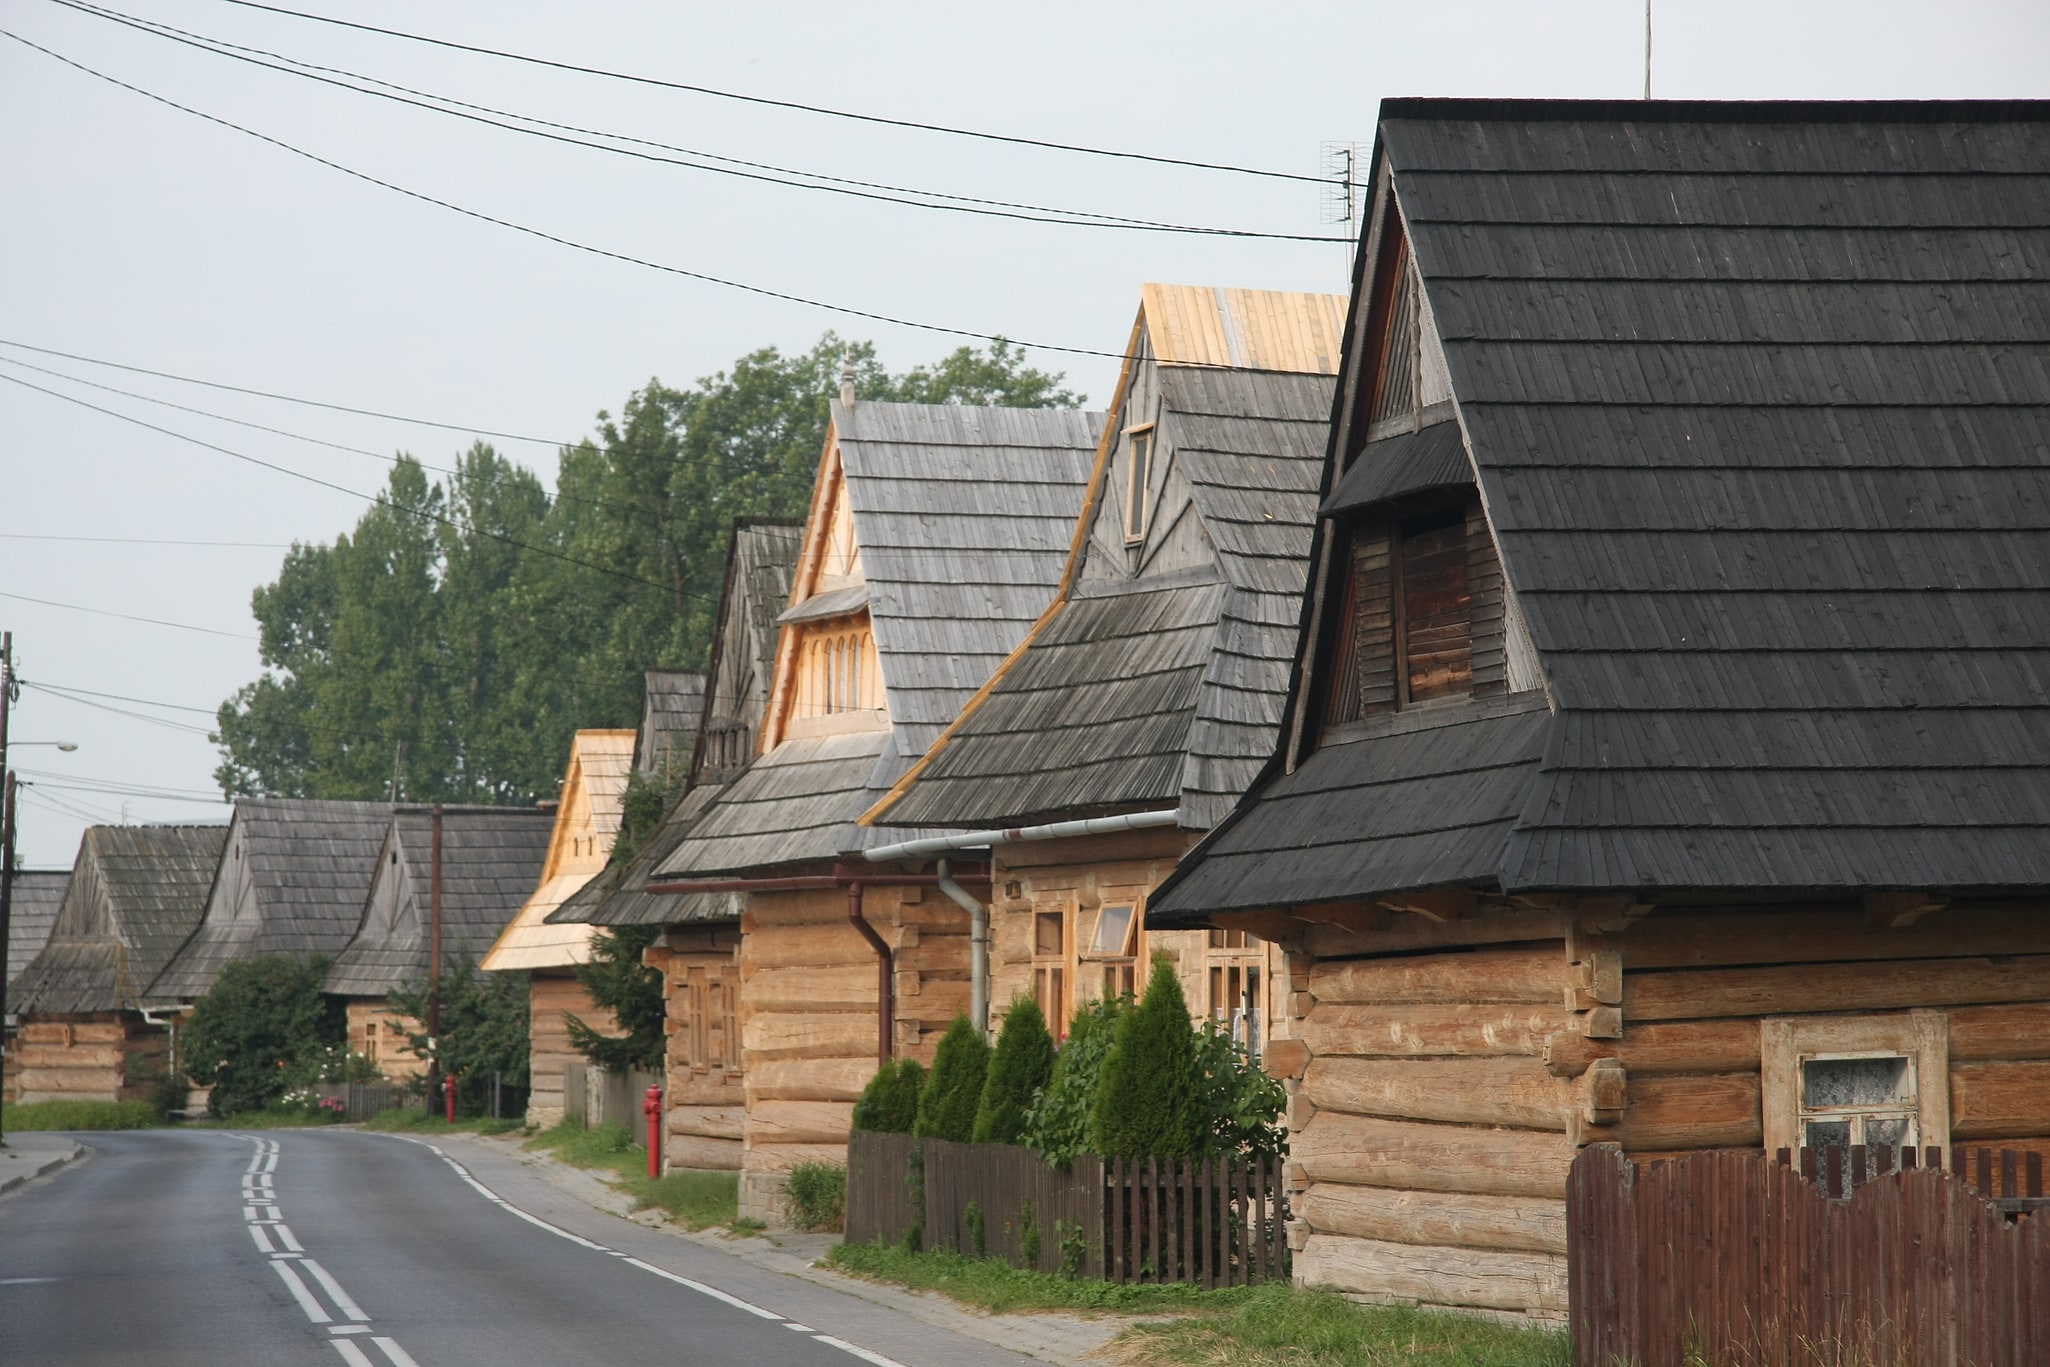 Chochołów, Poland